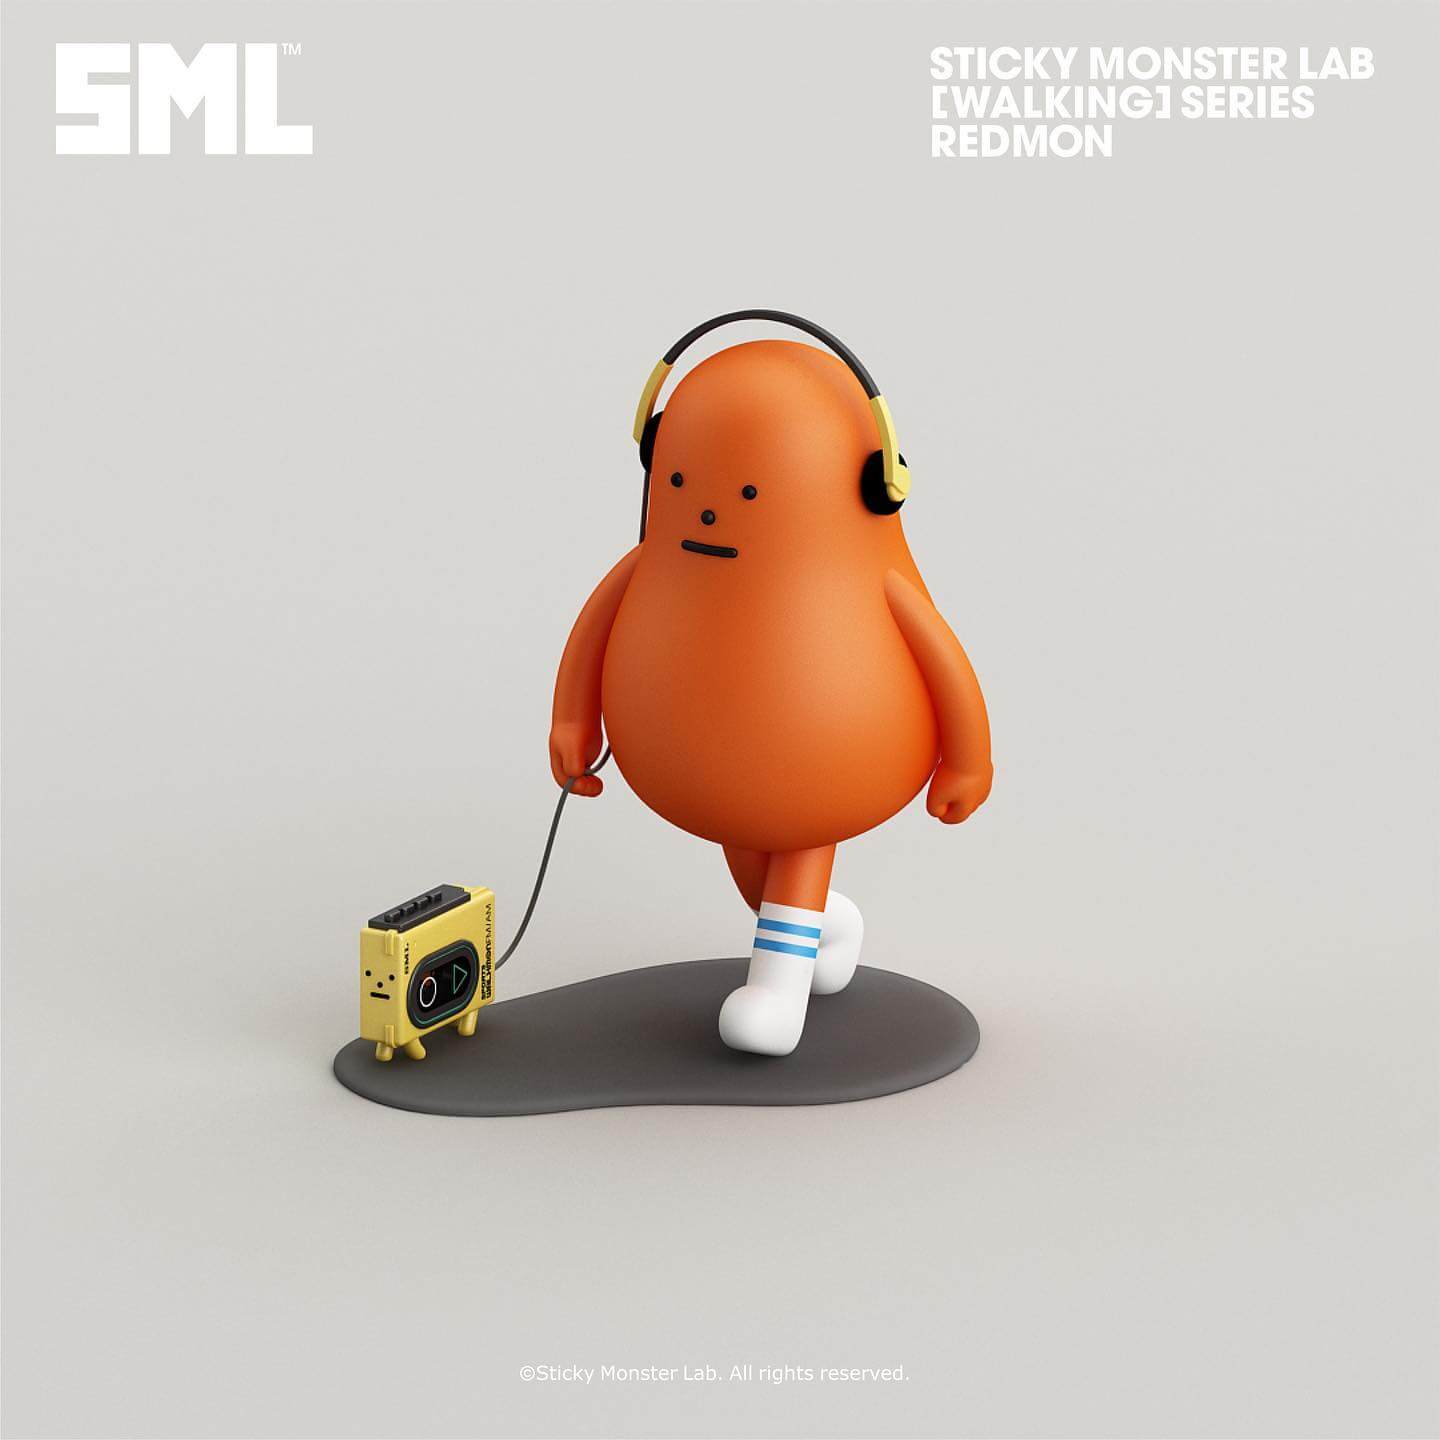 SML MINI Mini-Figure Blind Box Vol 1 WALKING SERIES by Sticky Monster Lab